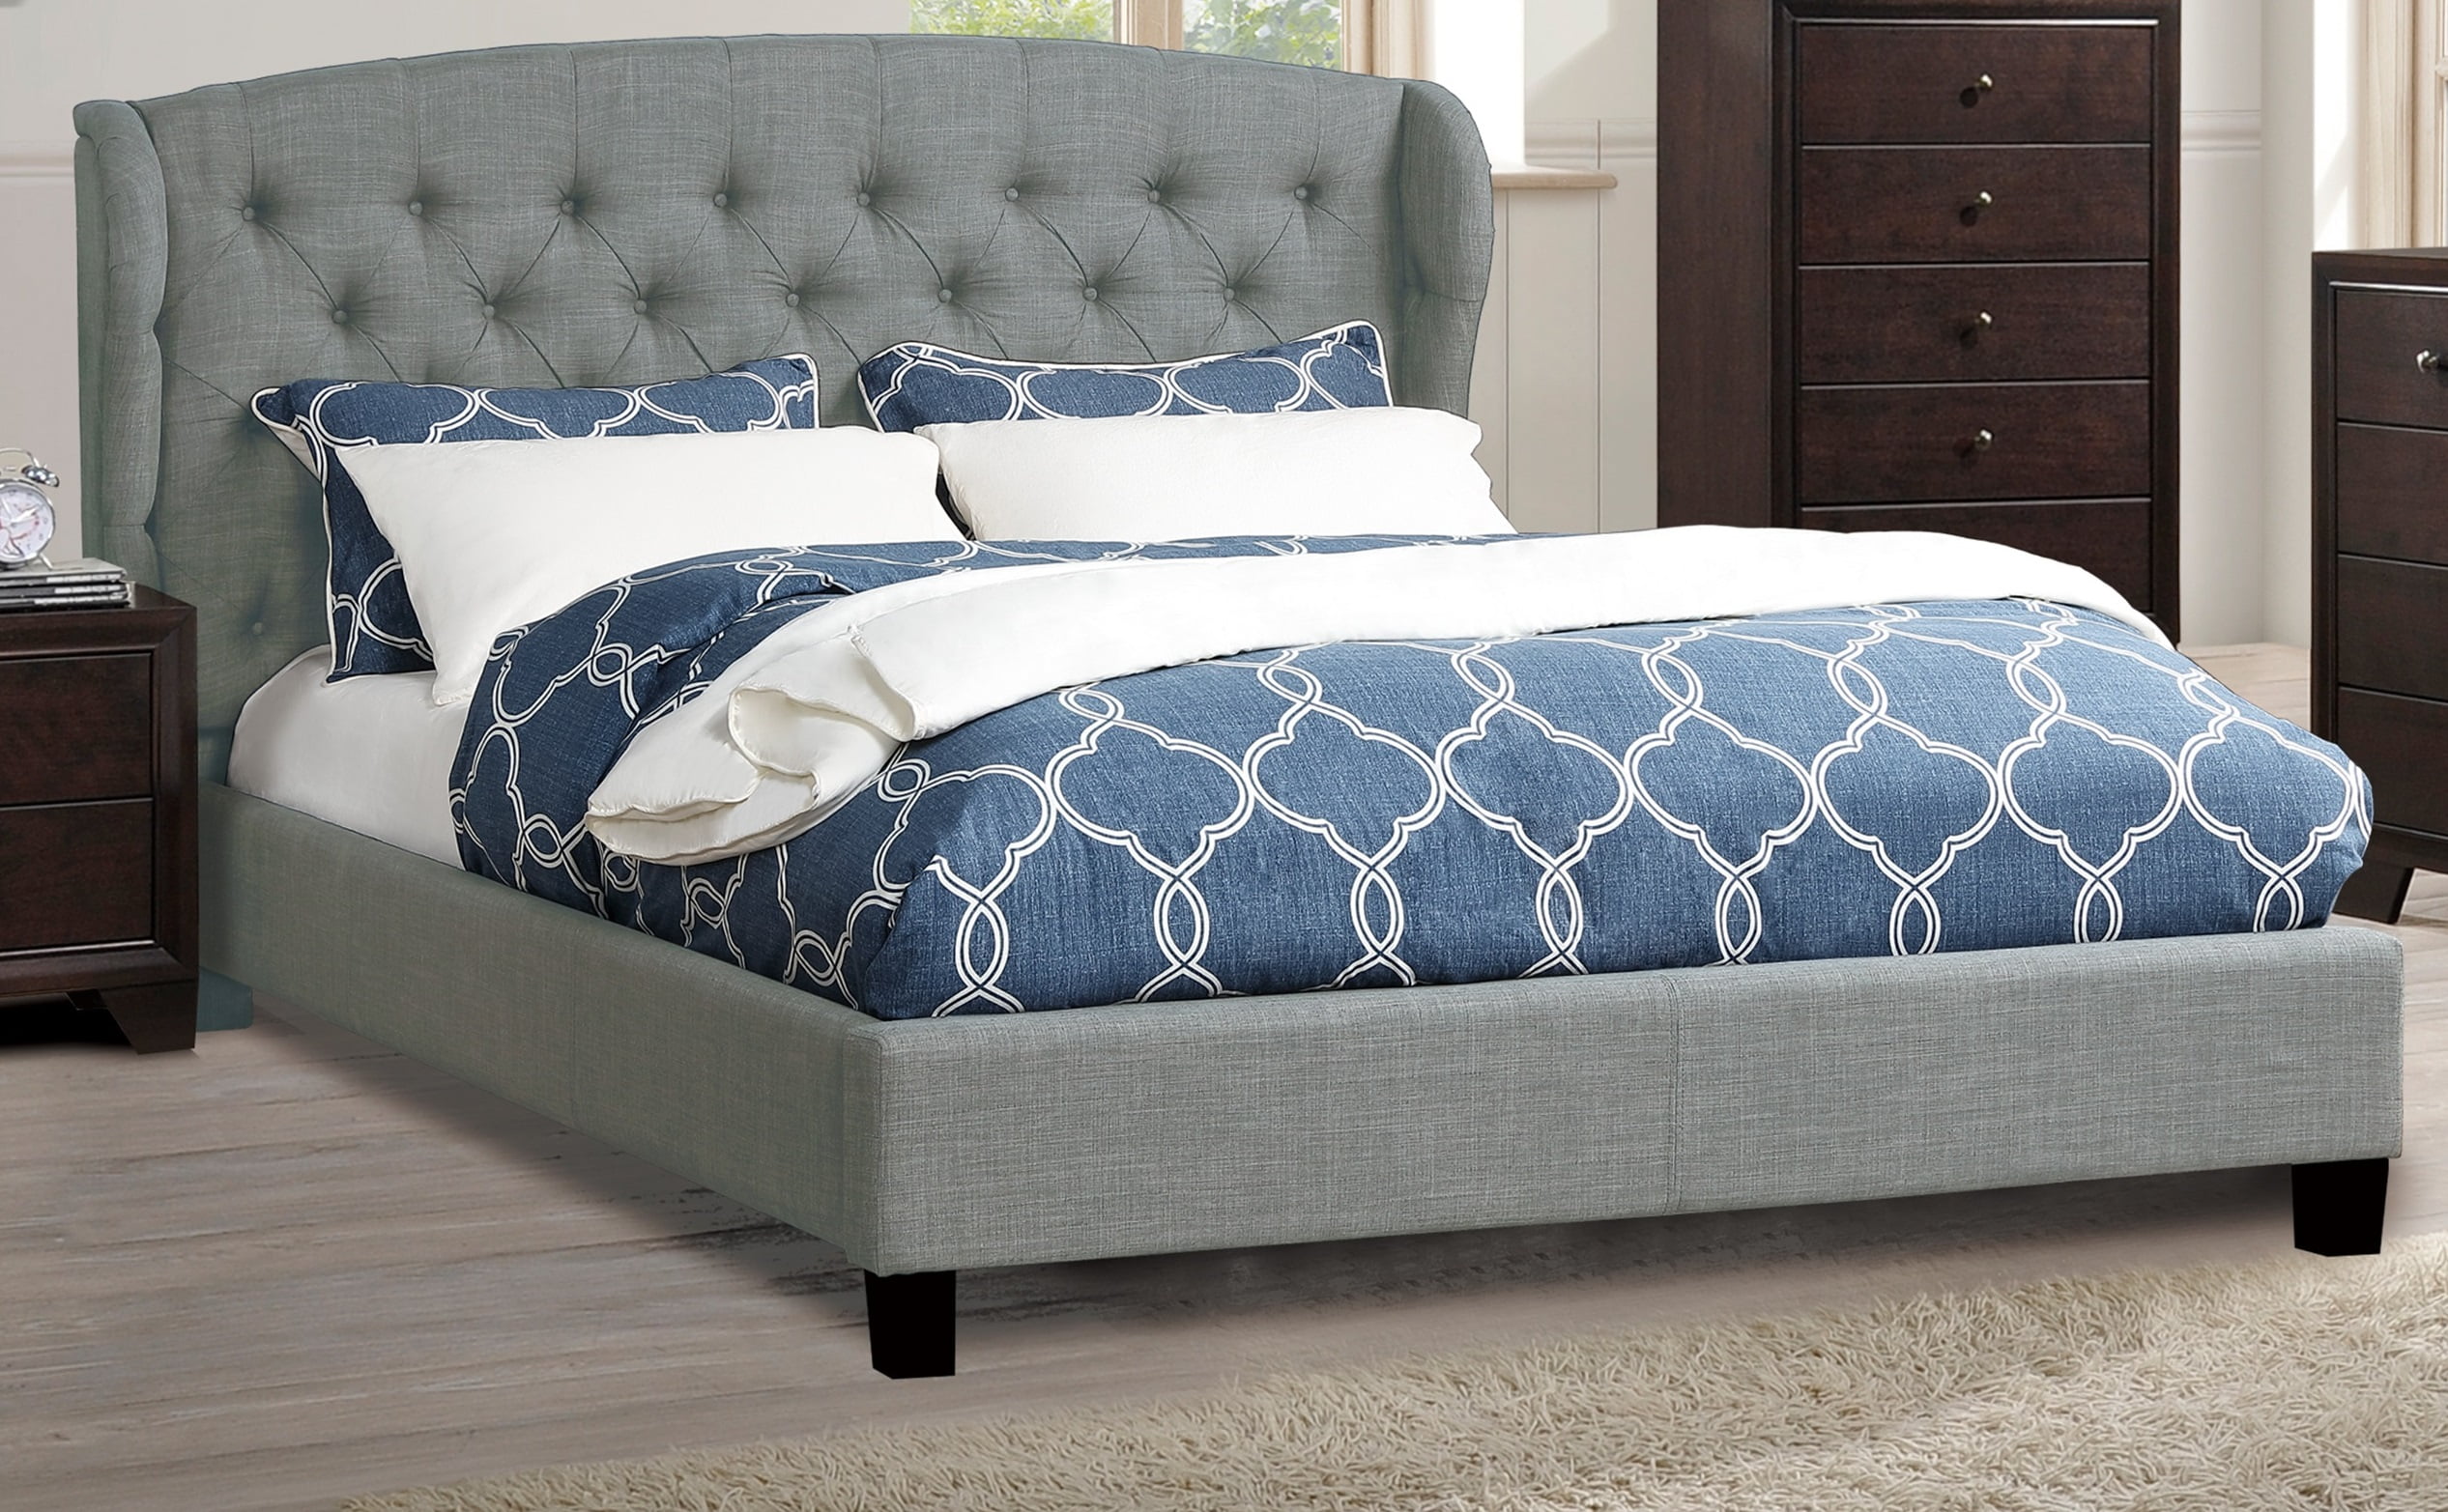 Full size bed Grey polyfiber bedroom furniture 1pc bed set Tufted